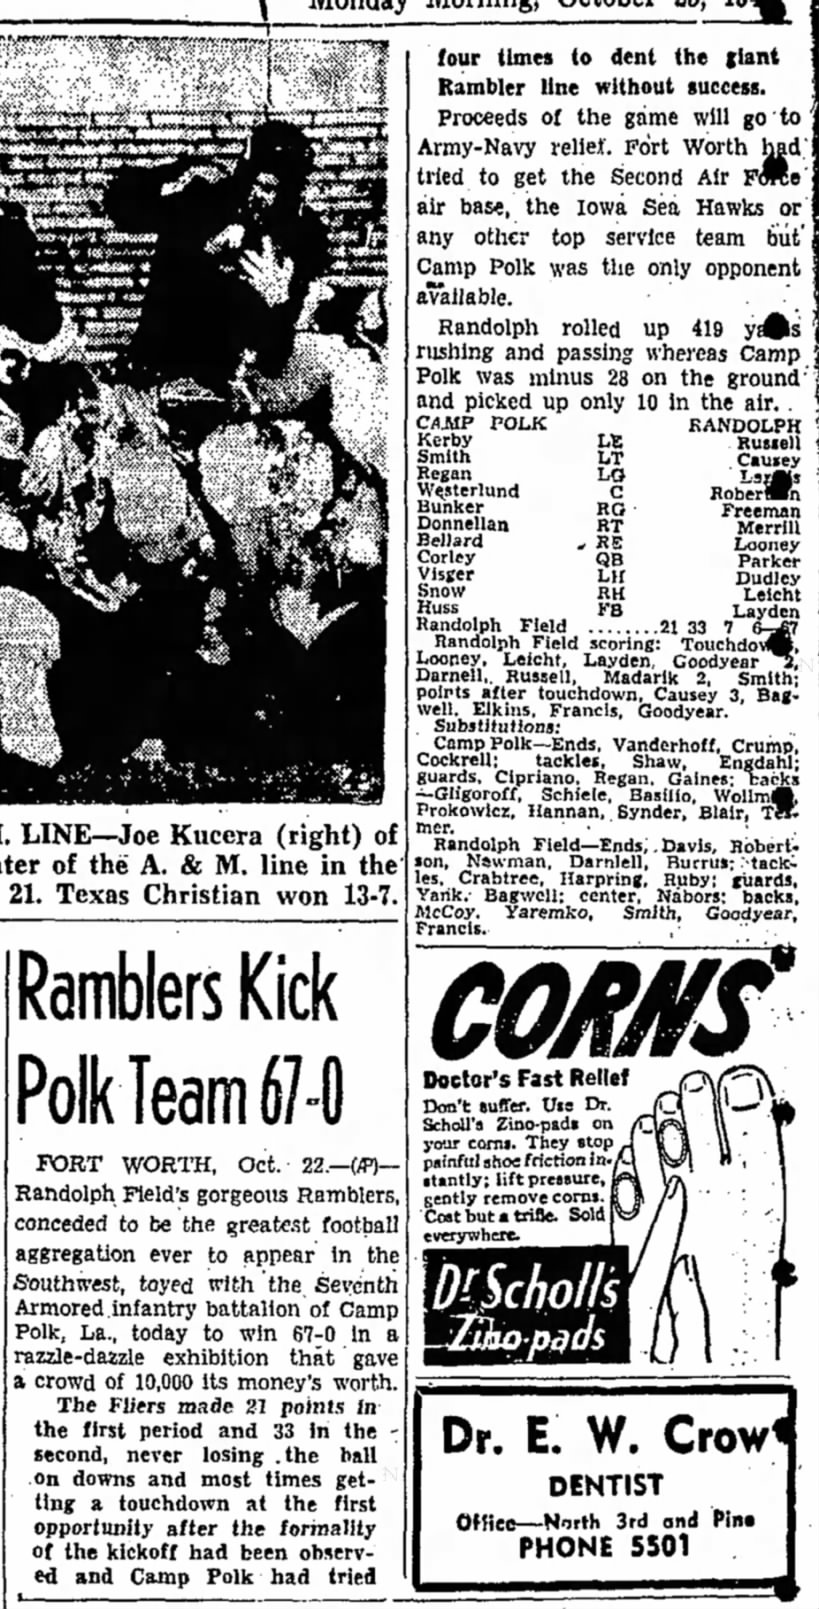 Ramblers Kick Polk Team 67-0